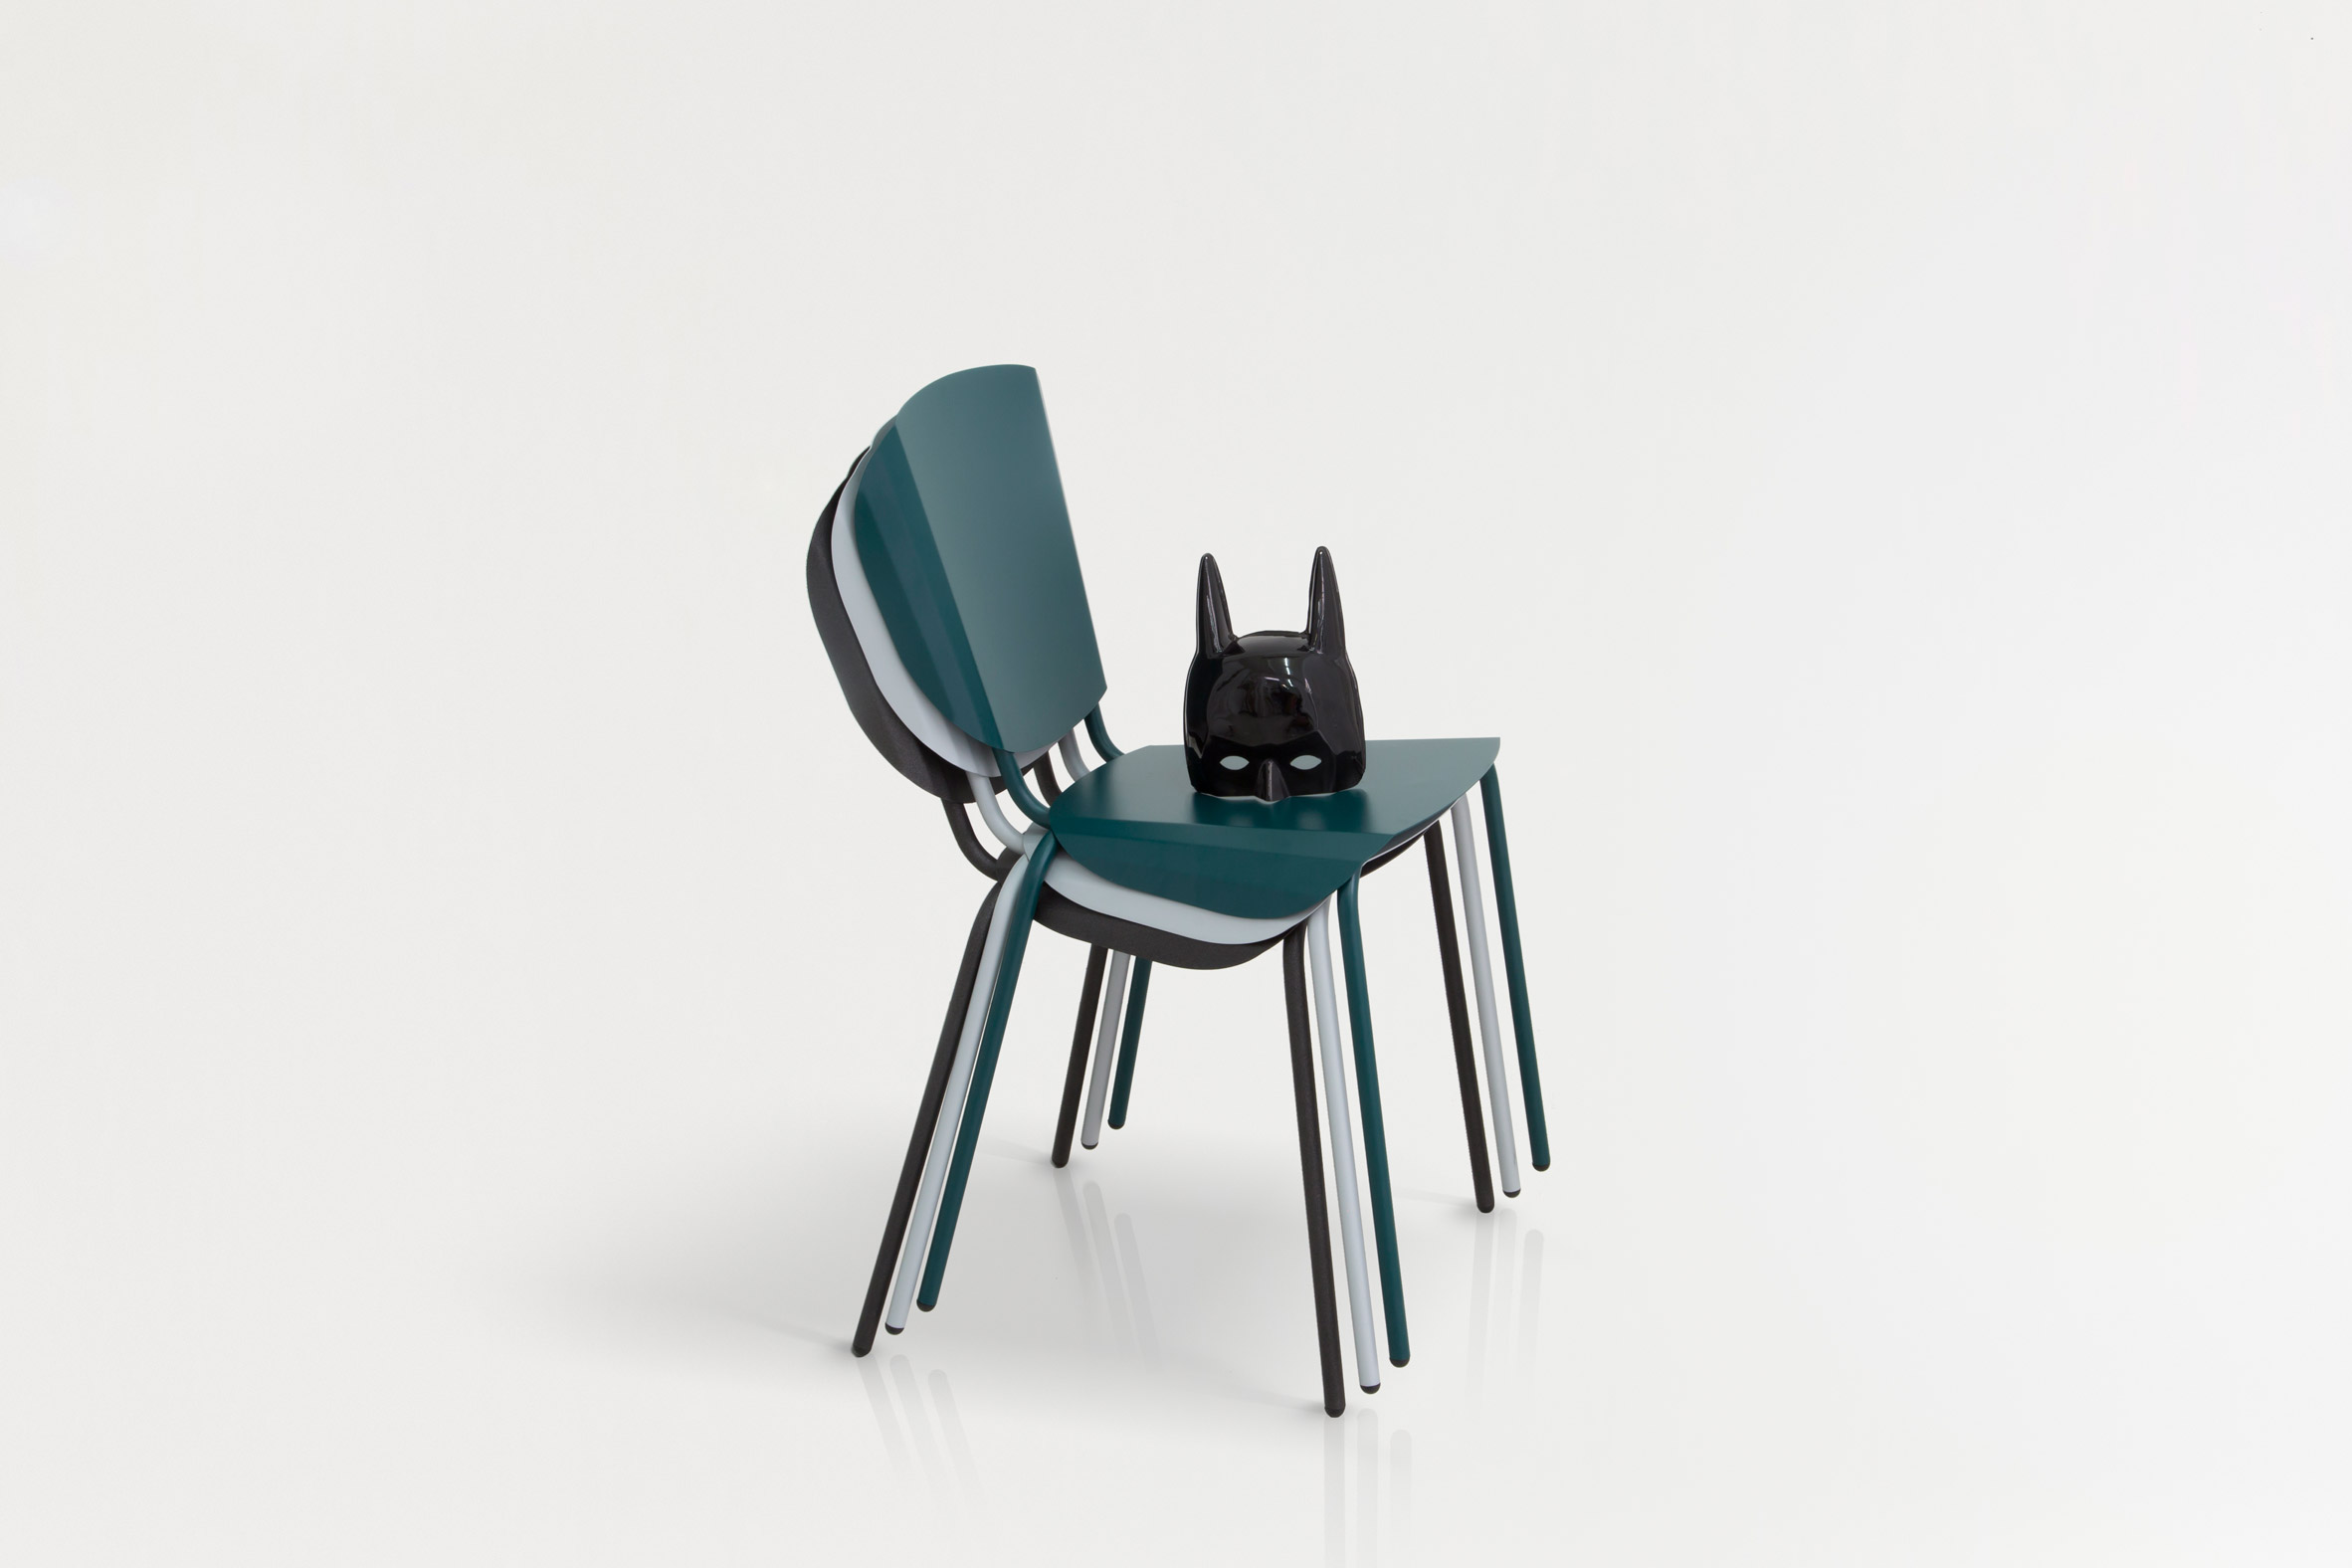 Batman serves as inspiration for Constance Guisset's latest chair